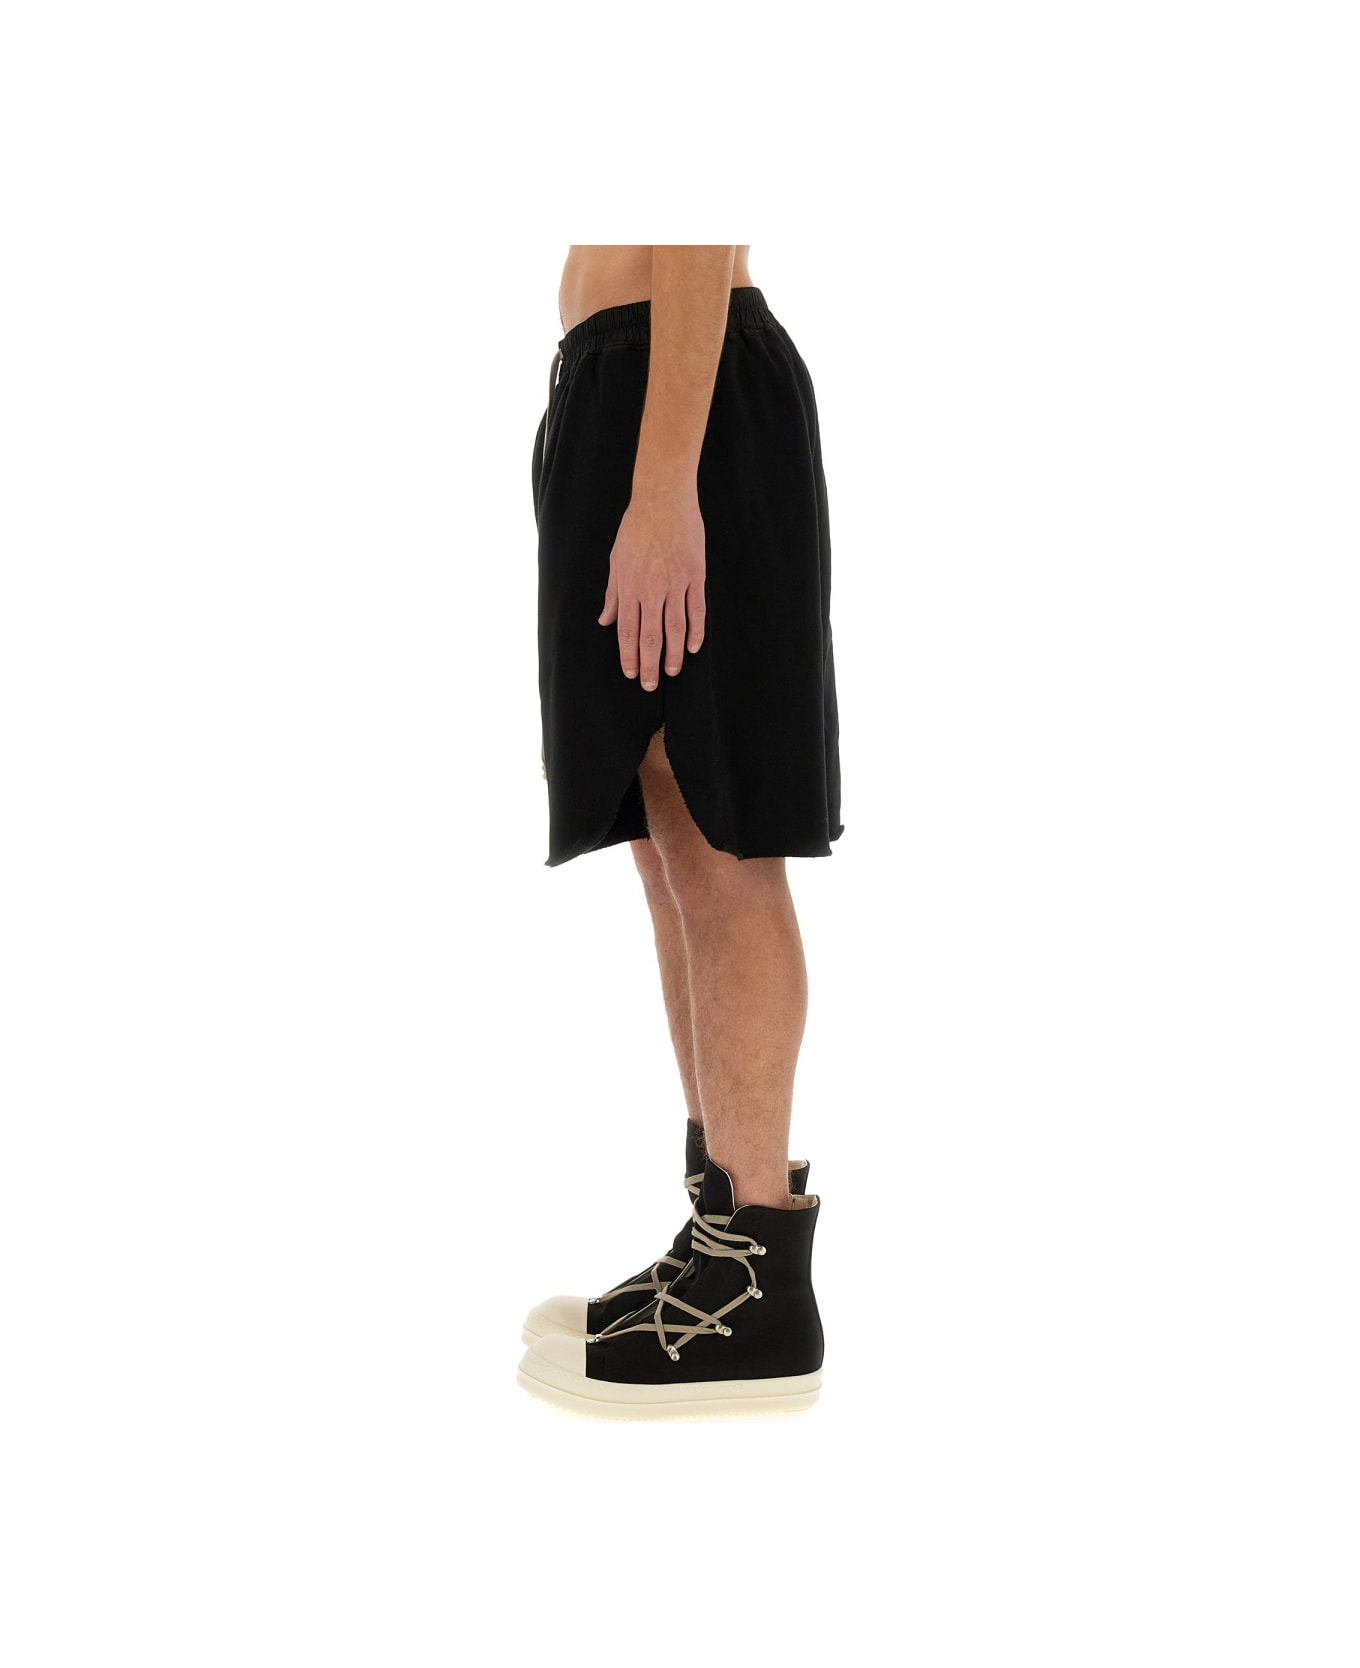 DRKSHDW Cotton Bermuda Shorts - BLACK